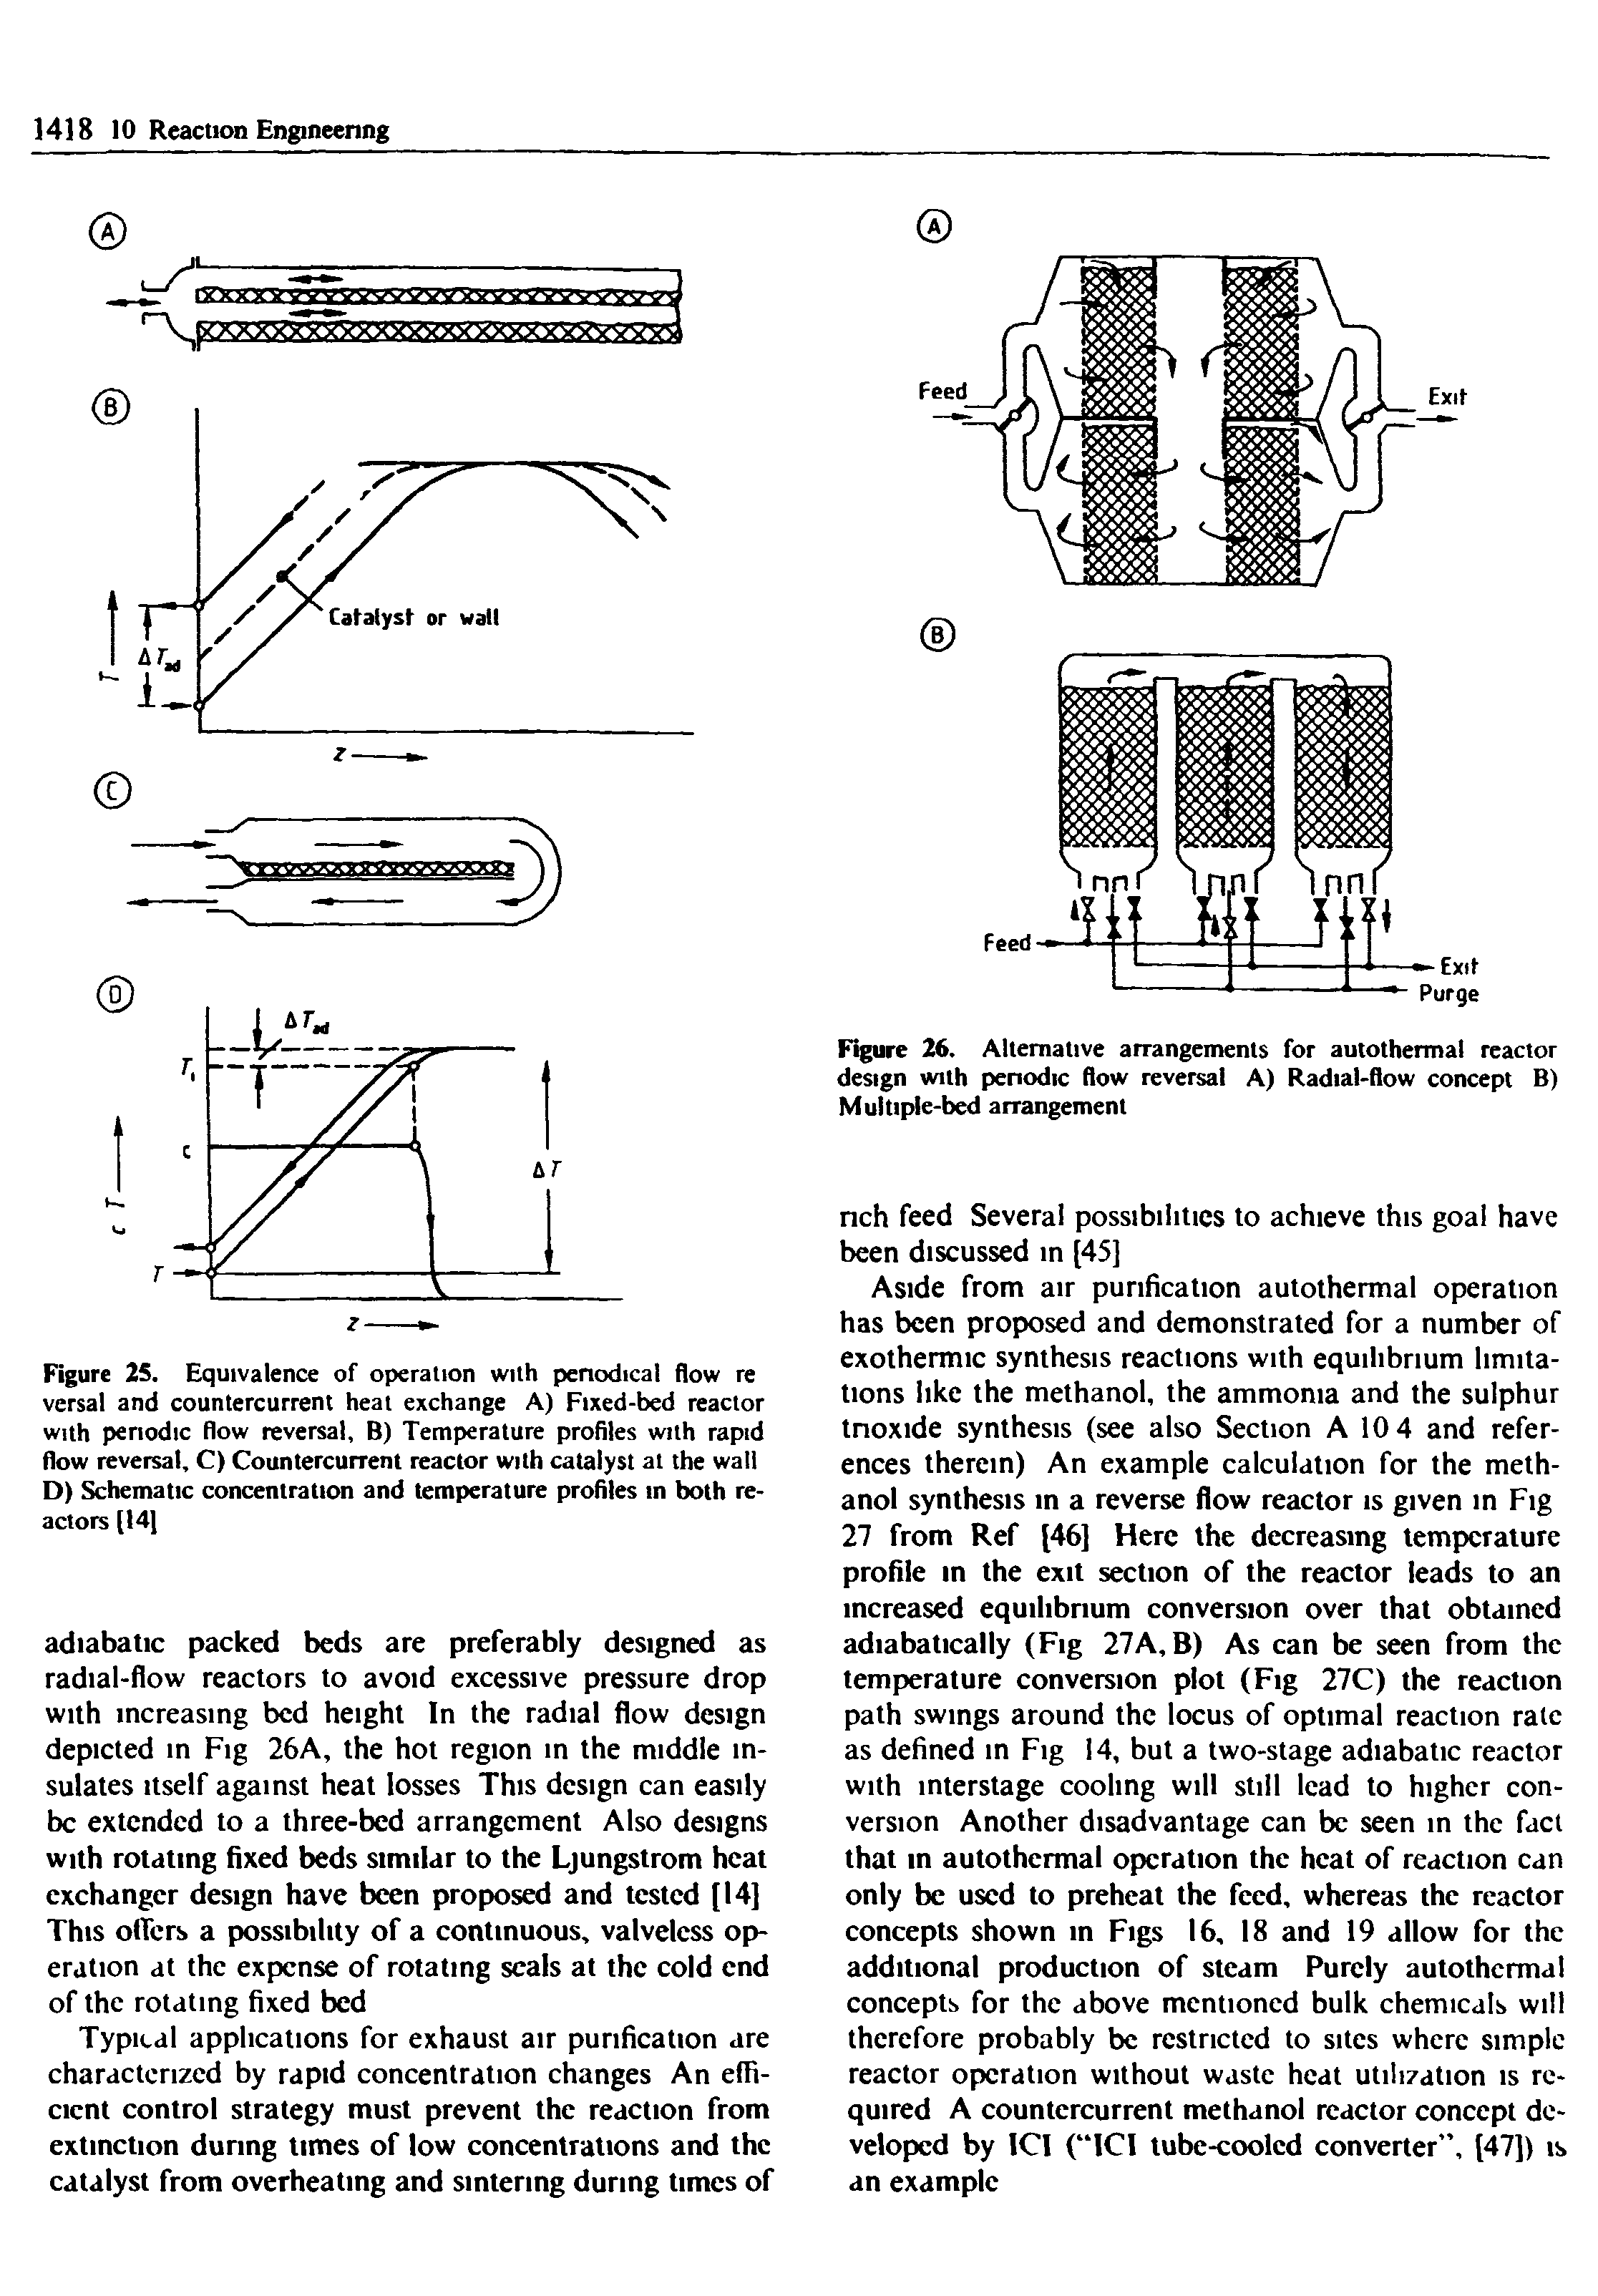 Figure 26. Alternative arrangements for autothermal reactor design with periodic flow reversal A) Radial-flow concept B) Multiple-bed arrangement...